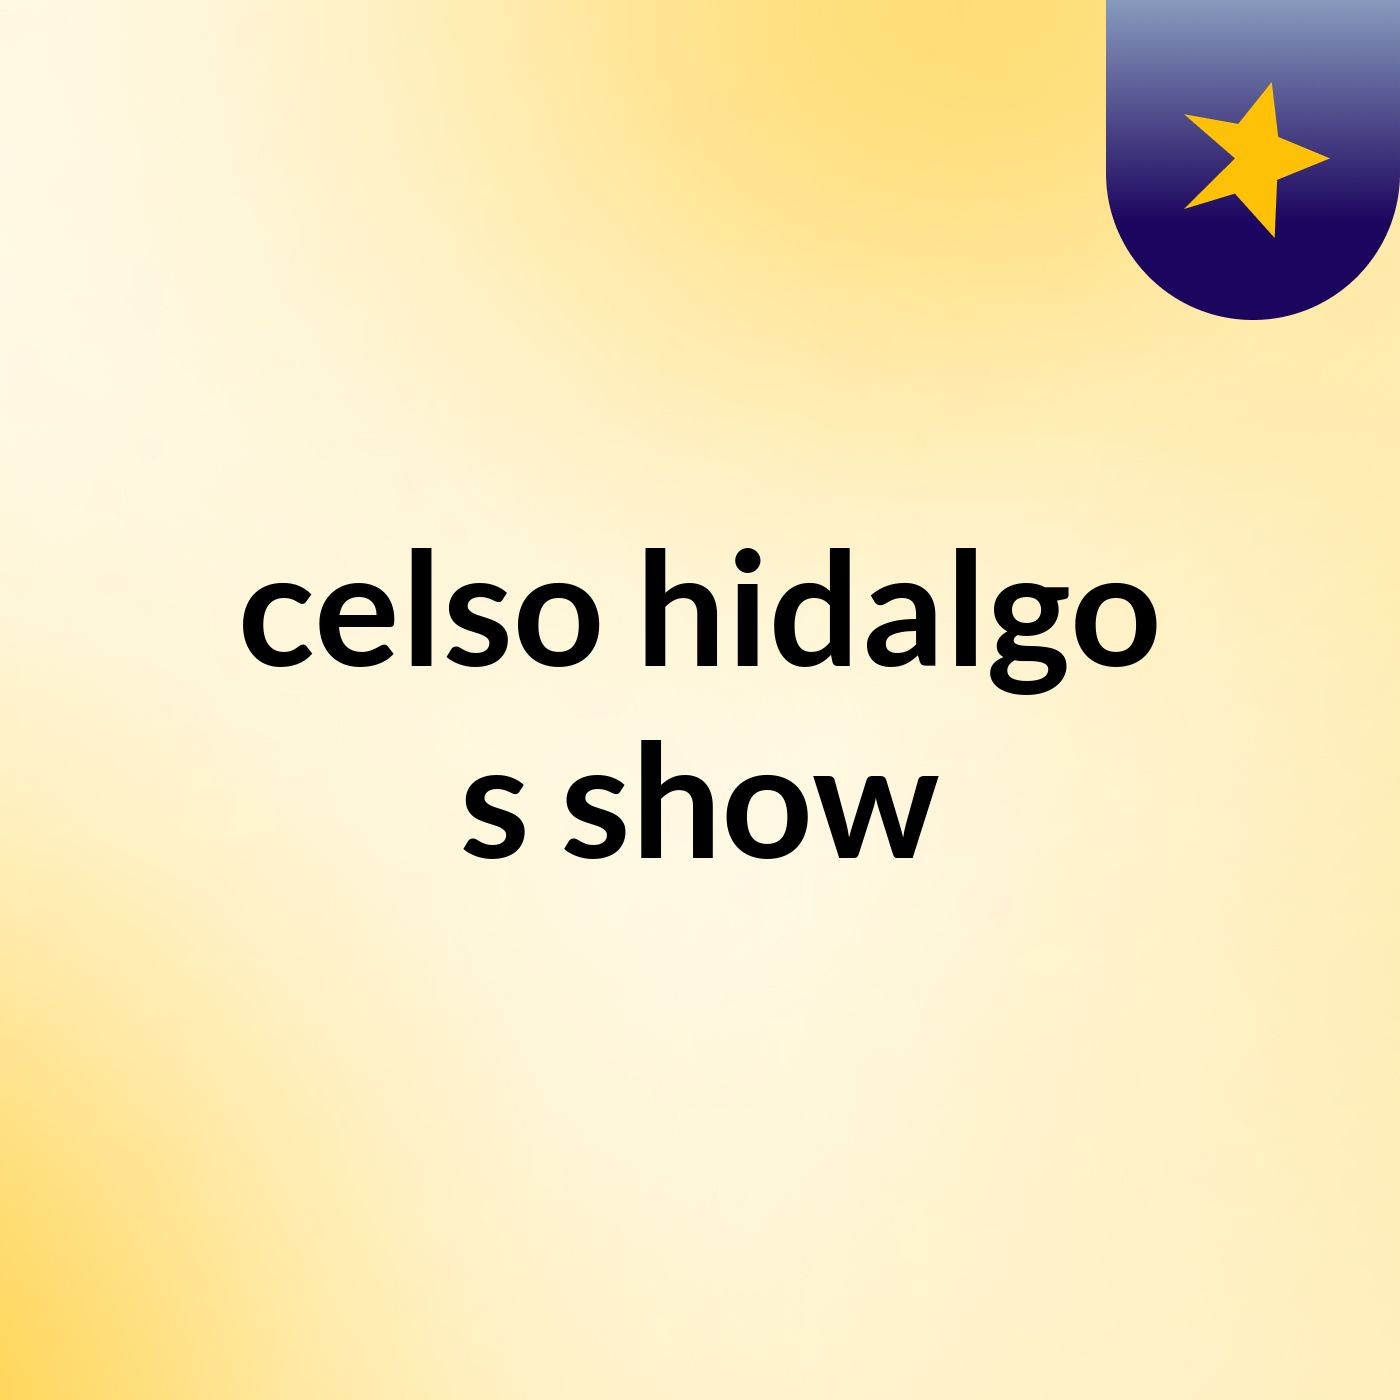 celso hidalgo's show